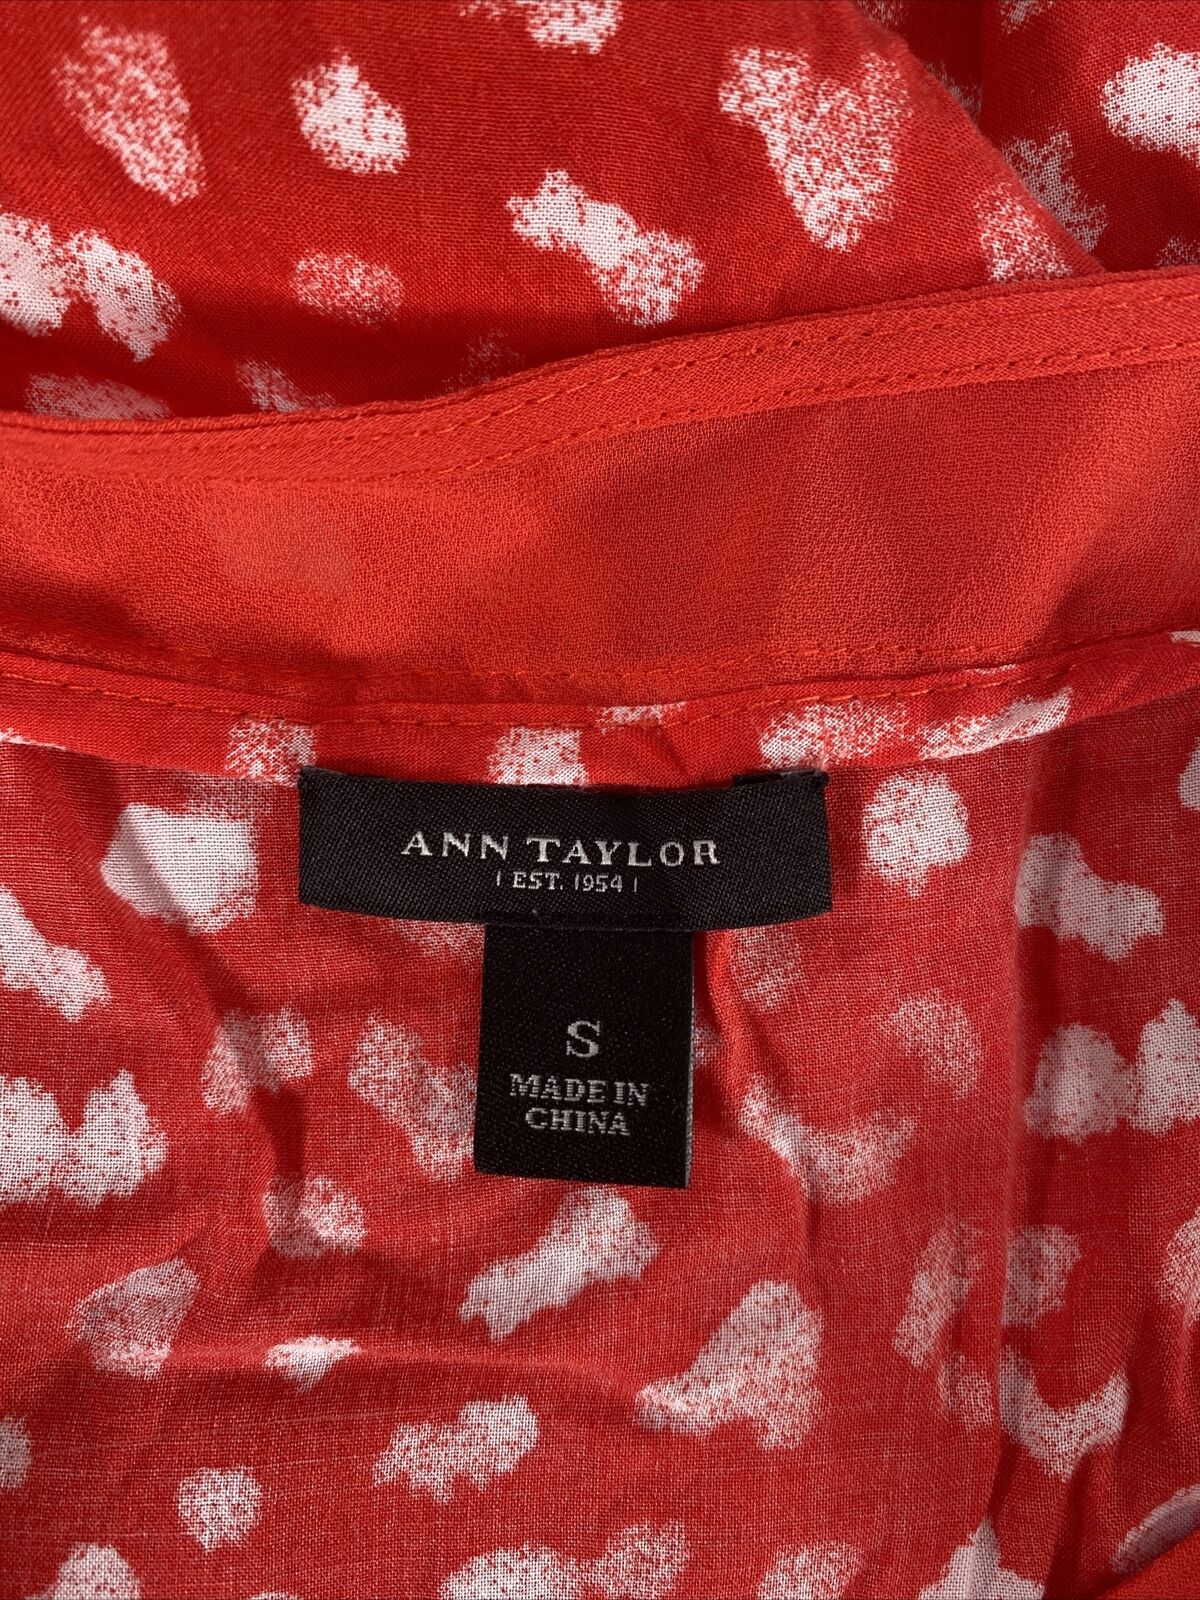 Ann Taylor Women's Red Short Sleeve Asymmetrical Blouse - S